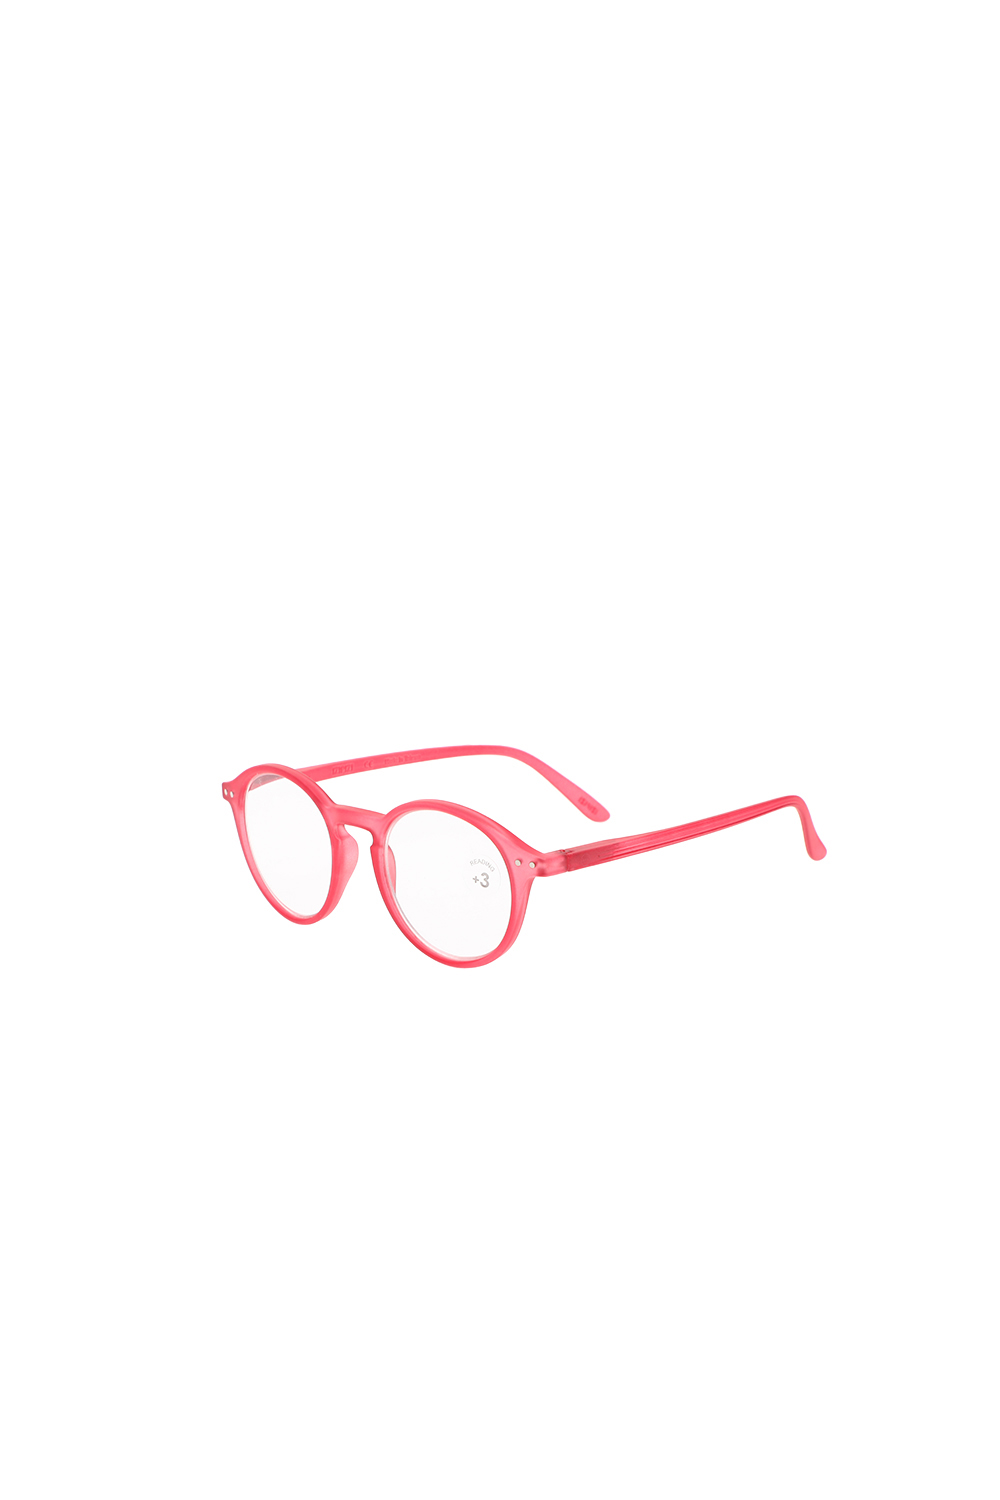 IZIPIZI - Unisex γυαλιά οράσεως IZIPIZI 1 SHF COL D READING BLOOM ροζ Γυναικεία/Αξεσουάρ/Γυαλιά/Οράσεως